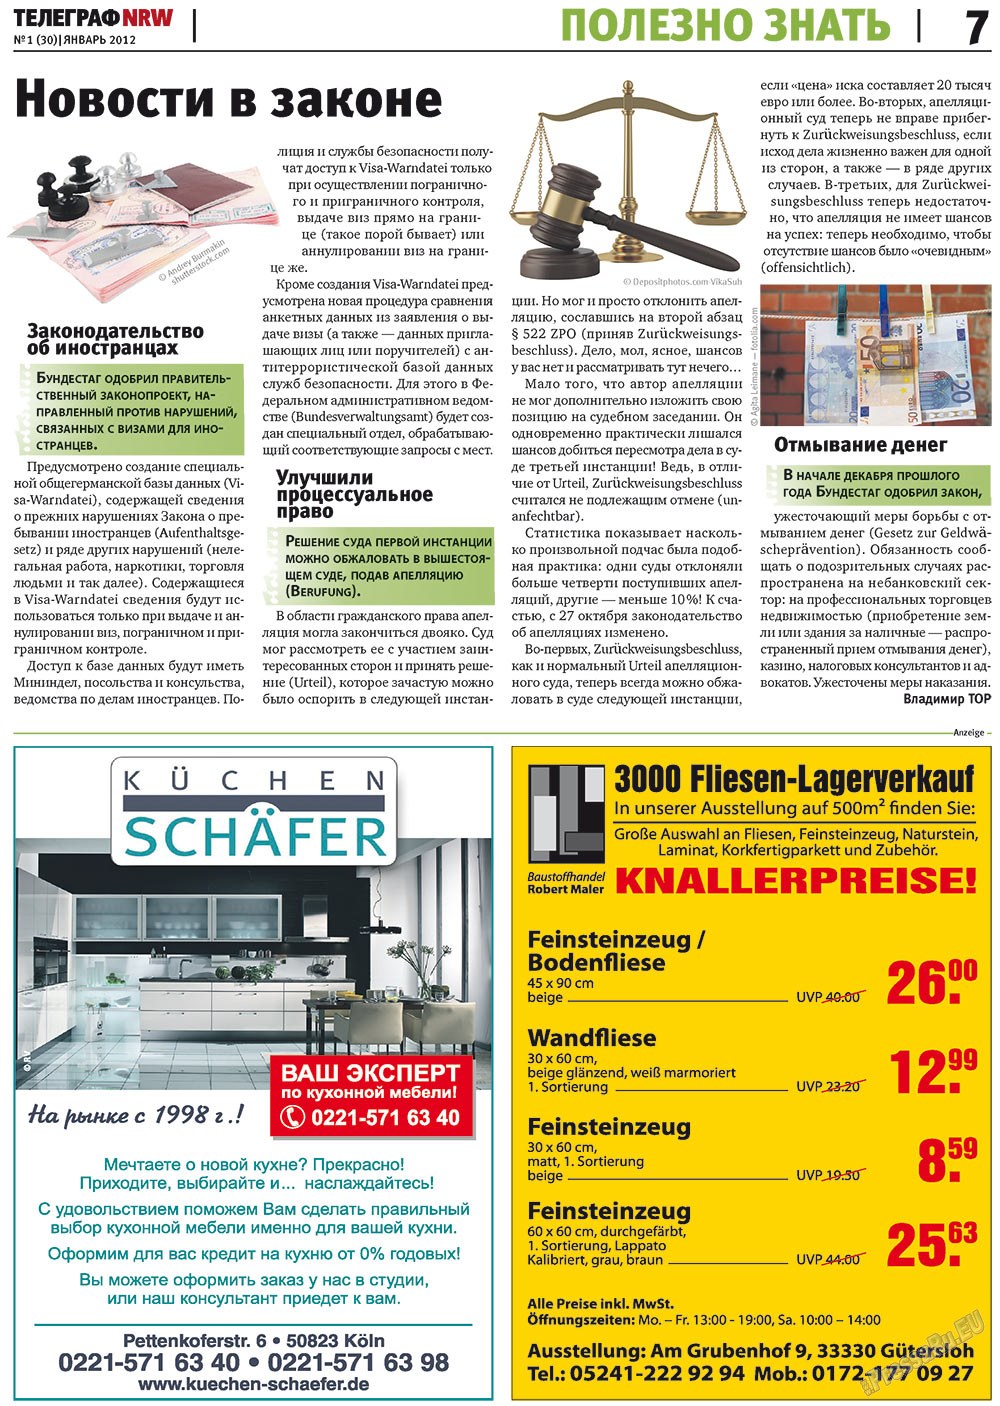 Телеграф NRW, газета. 2012 №1 стр.7